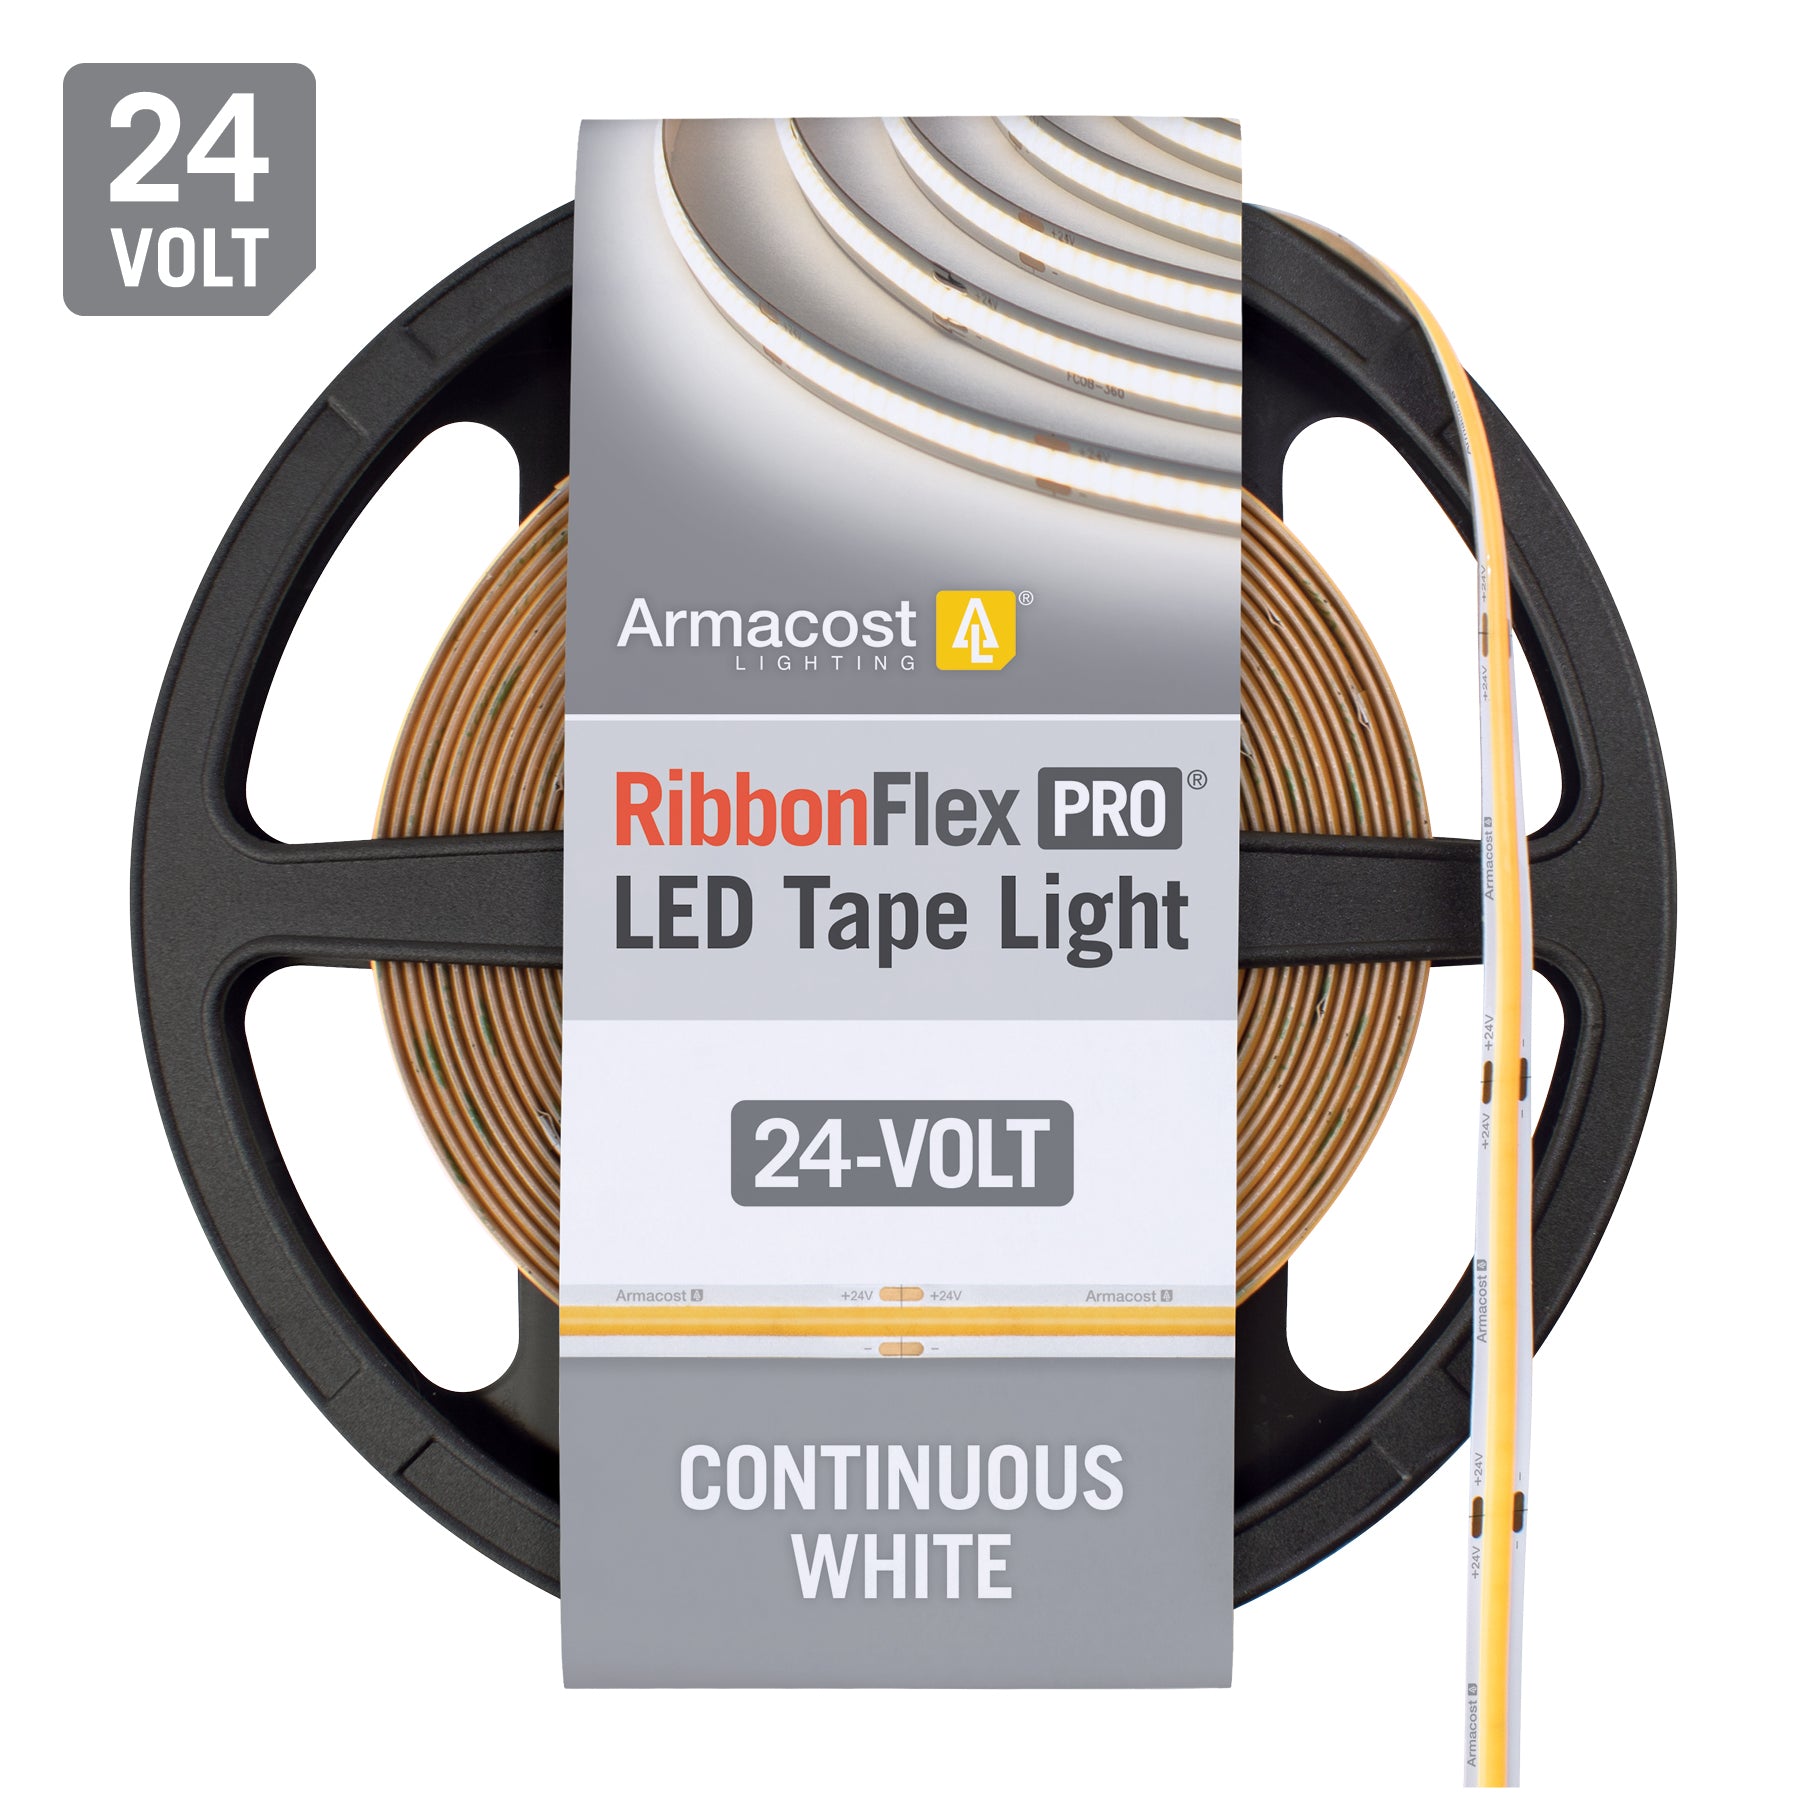 24 Volt White COB LED Strip Light Tape